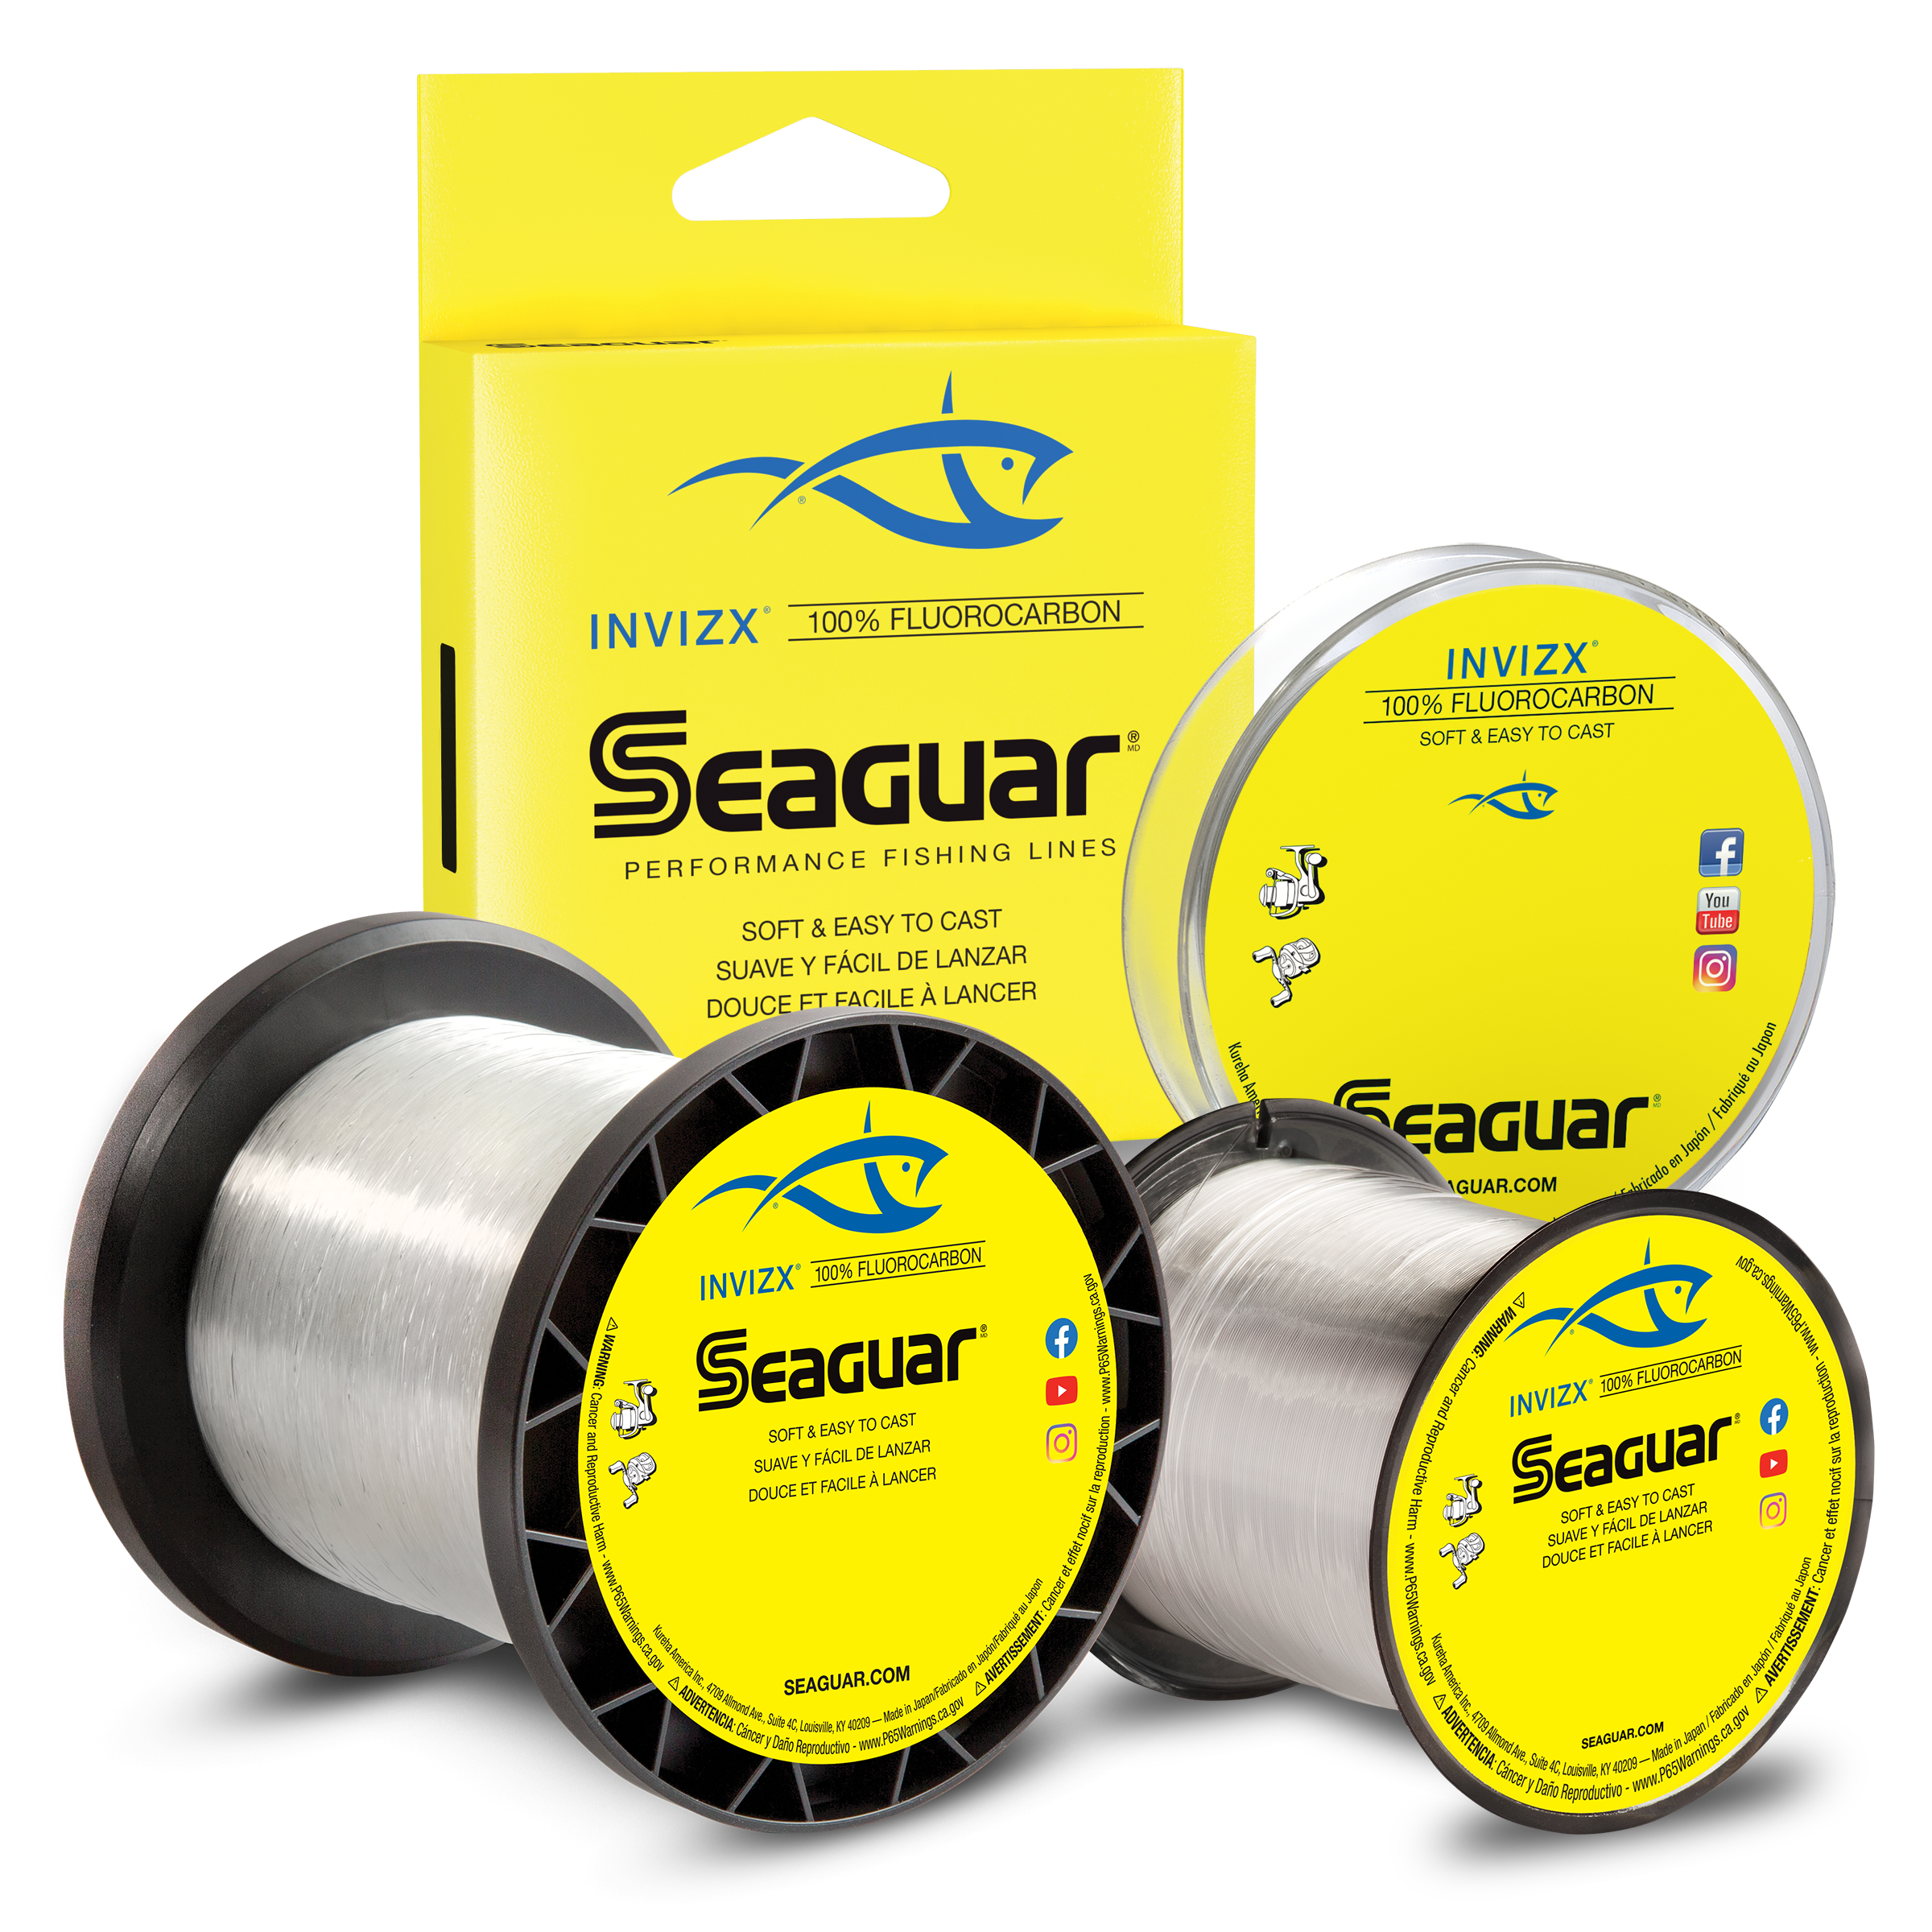 Seaguar Invizx Fluorocarbon Fishing Line, Clear, 200 yds, 6 lb